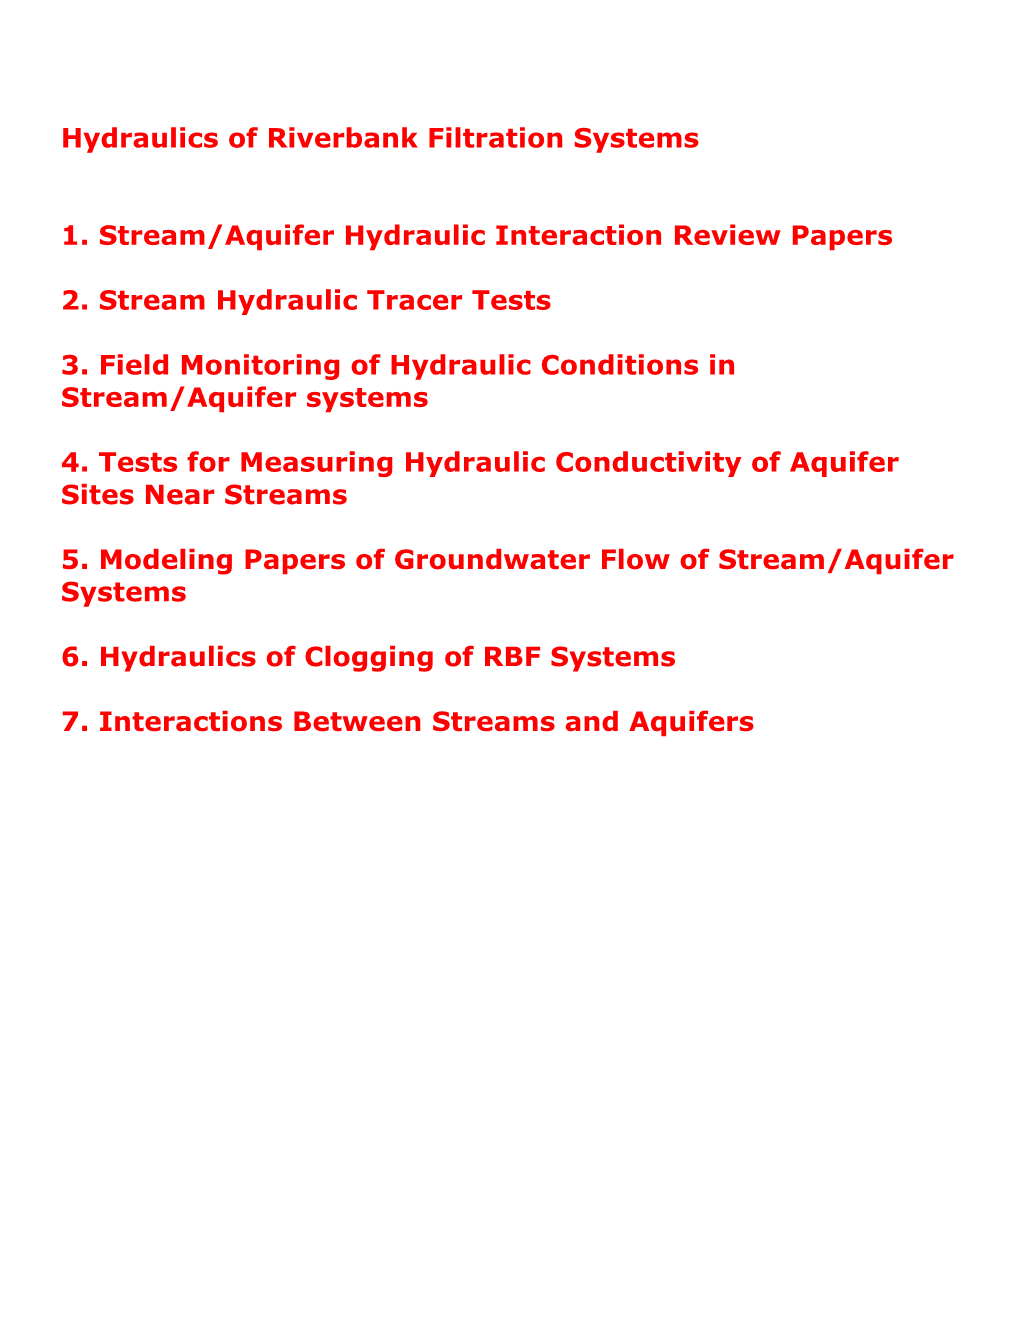 Title: Hydraulic Aspects of Riverbank Filtration - Field Studies